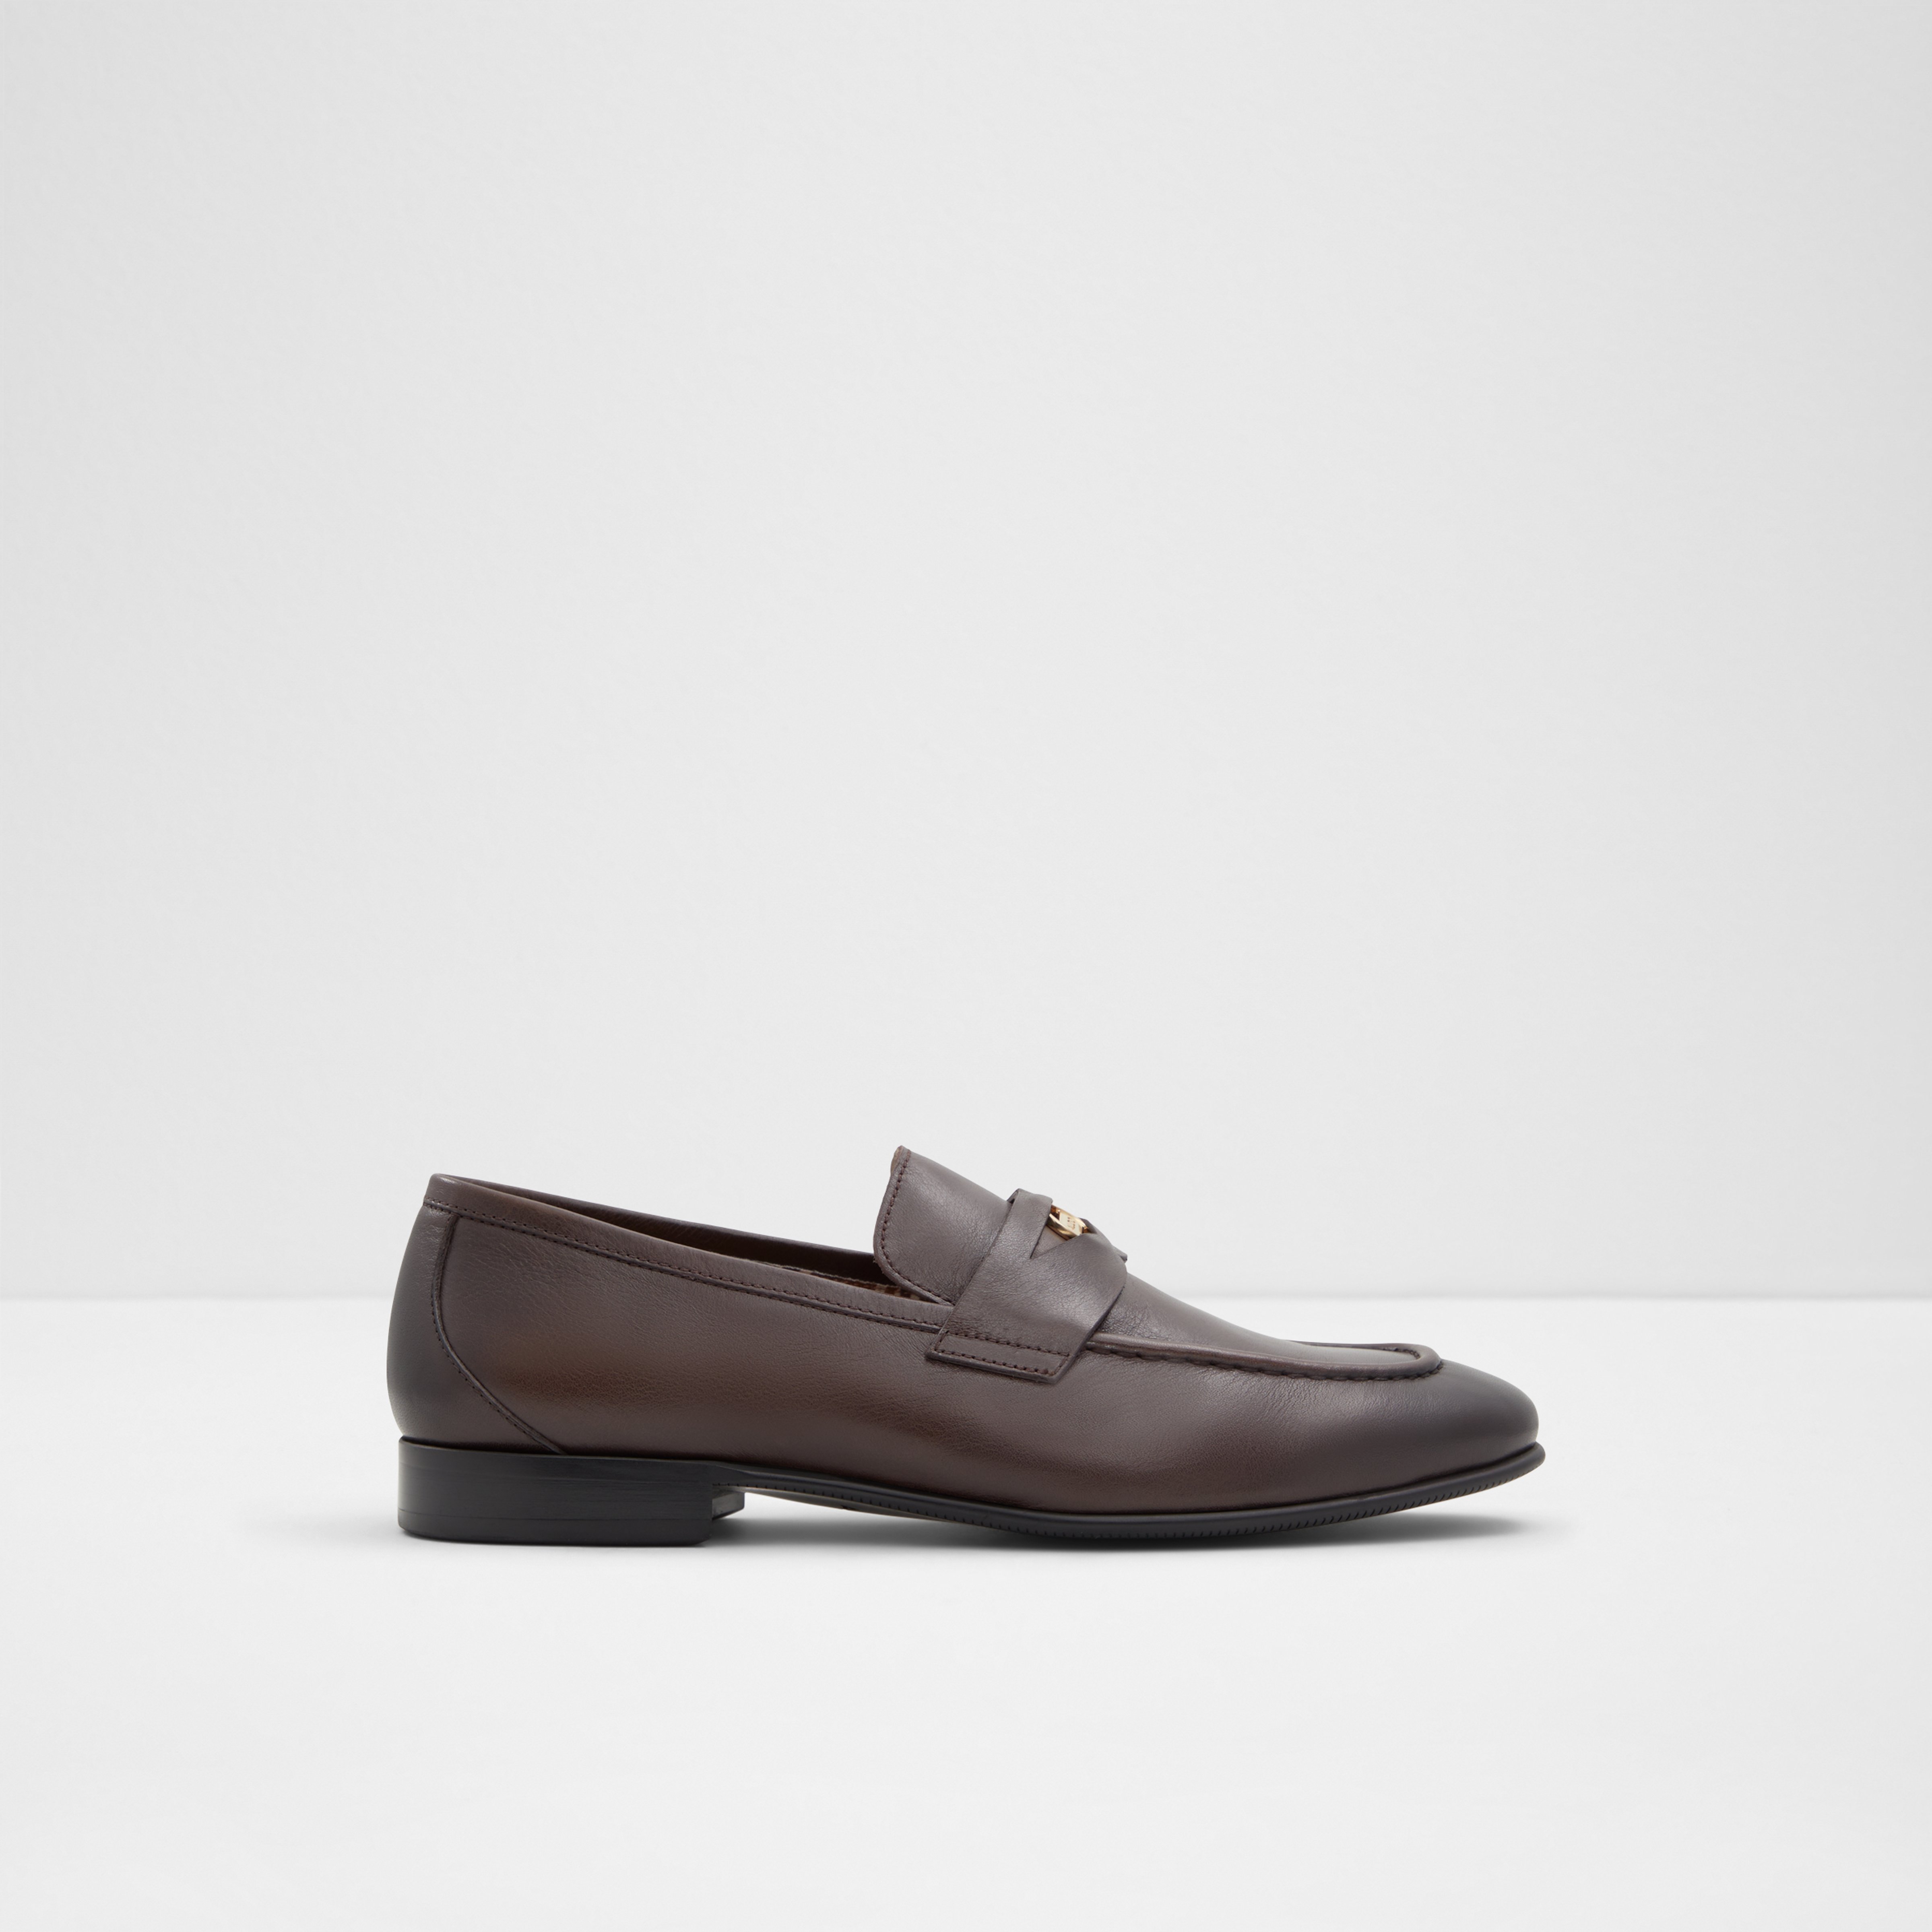 Aldo Shoes Esquire - Men